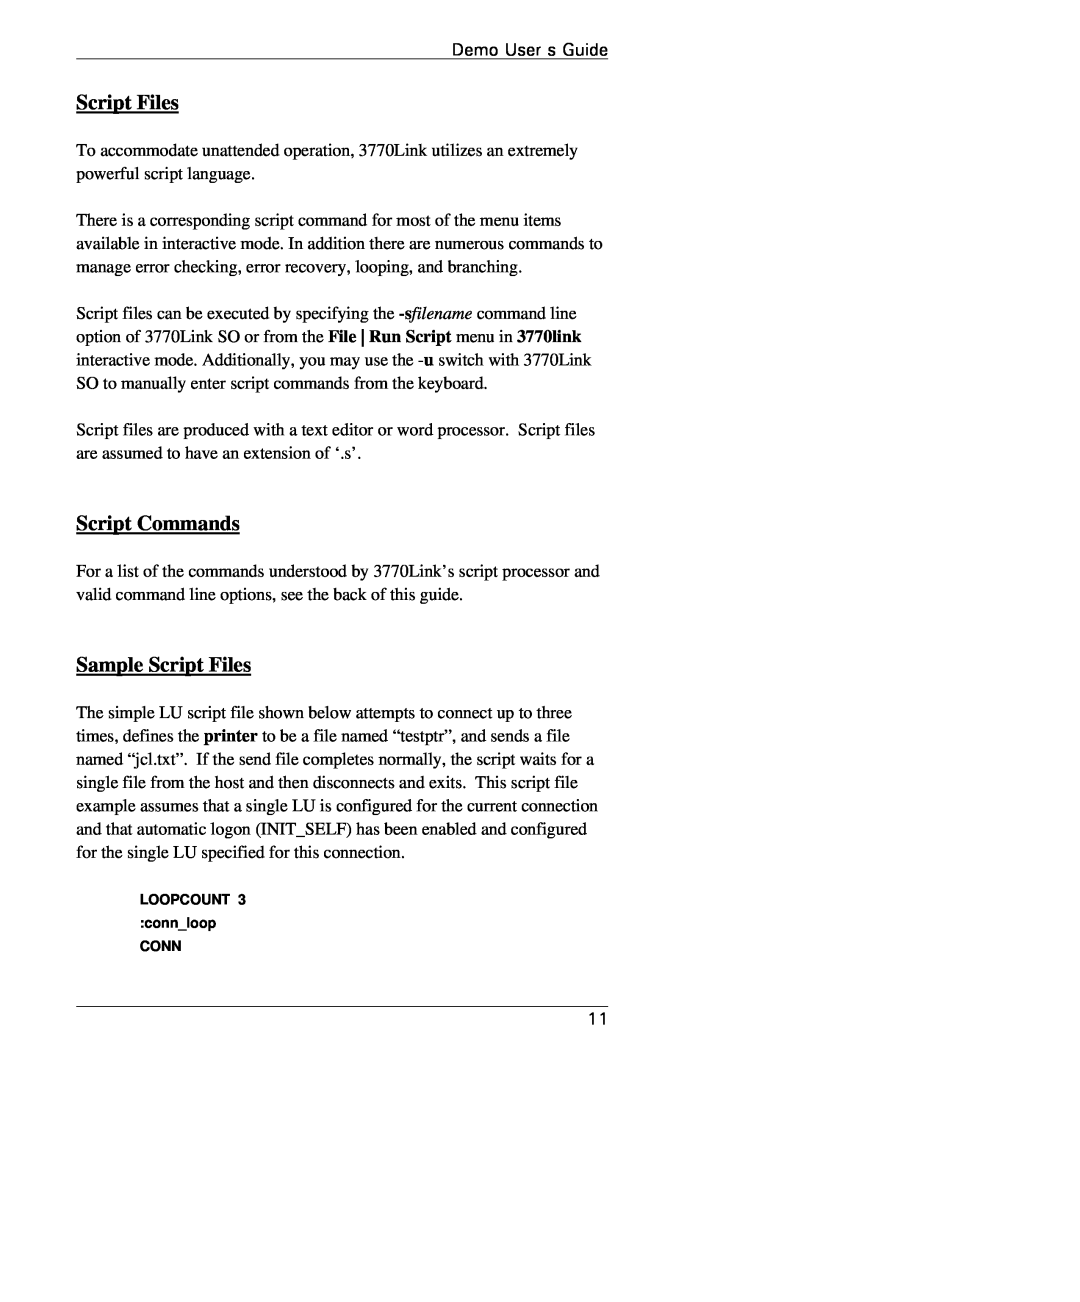 IBM 3770 manual Script Commands, Sample Script Files, Demo User’s Guide 